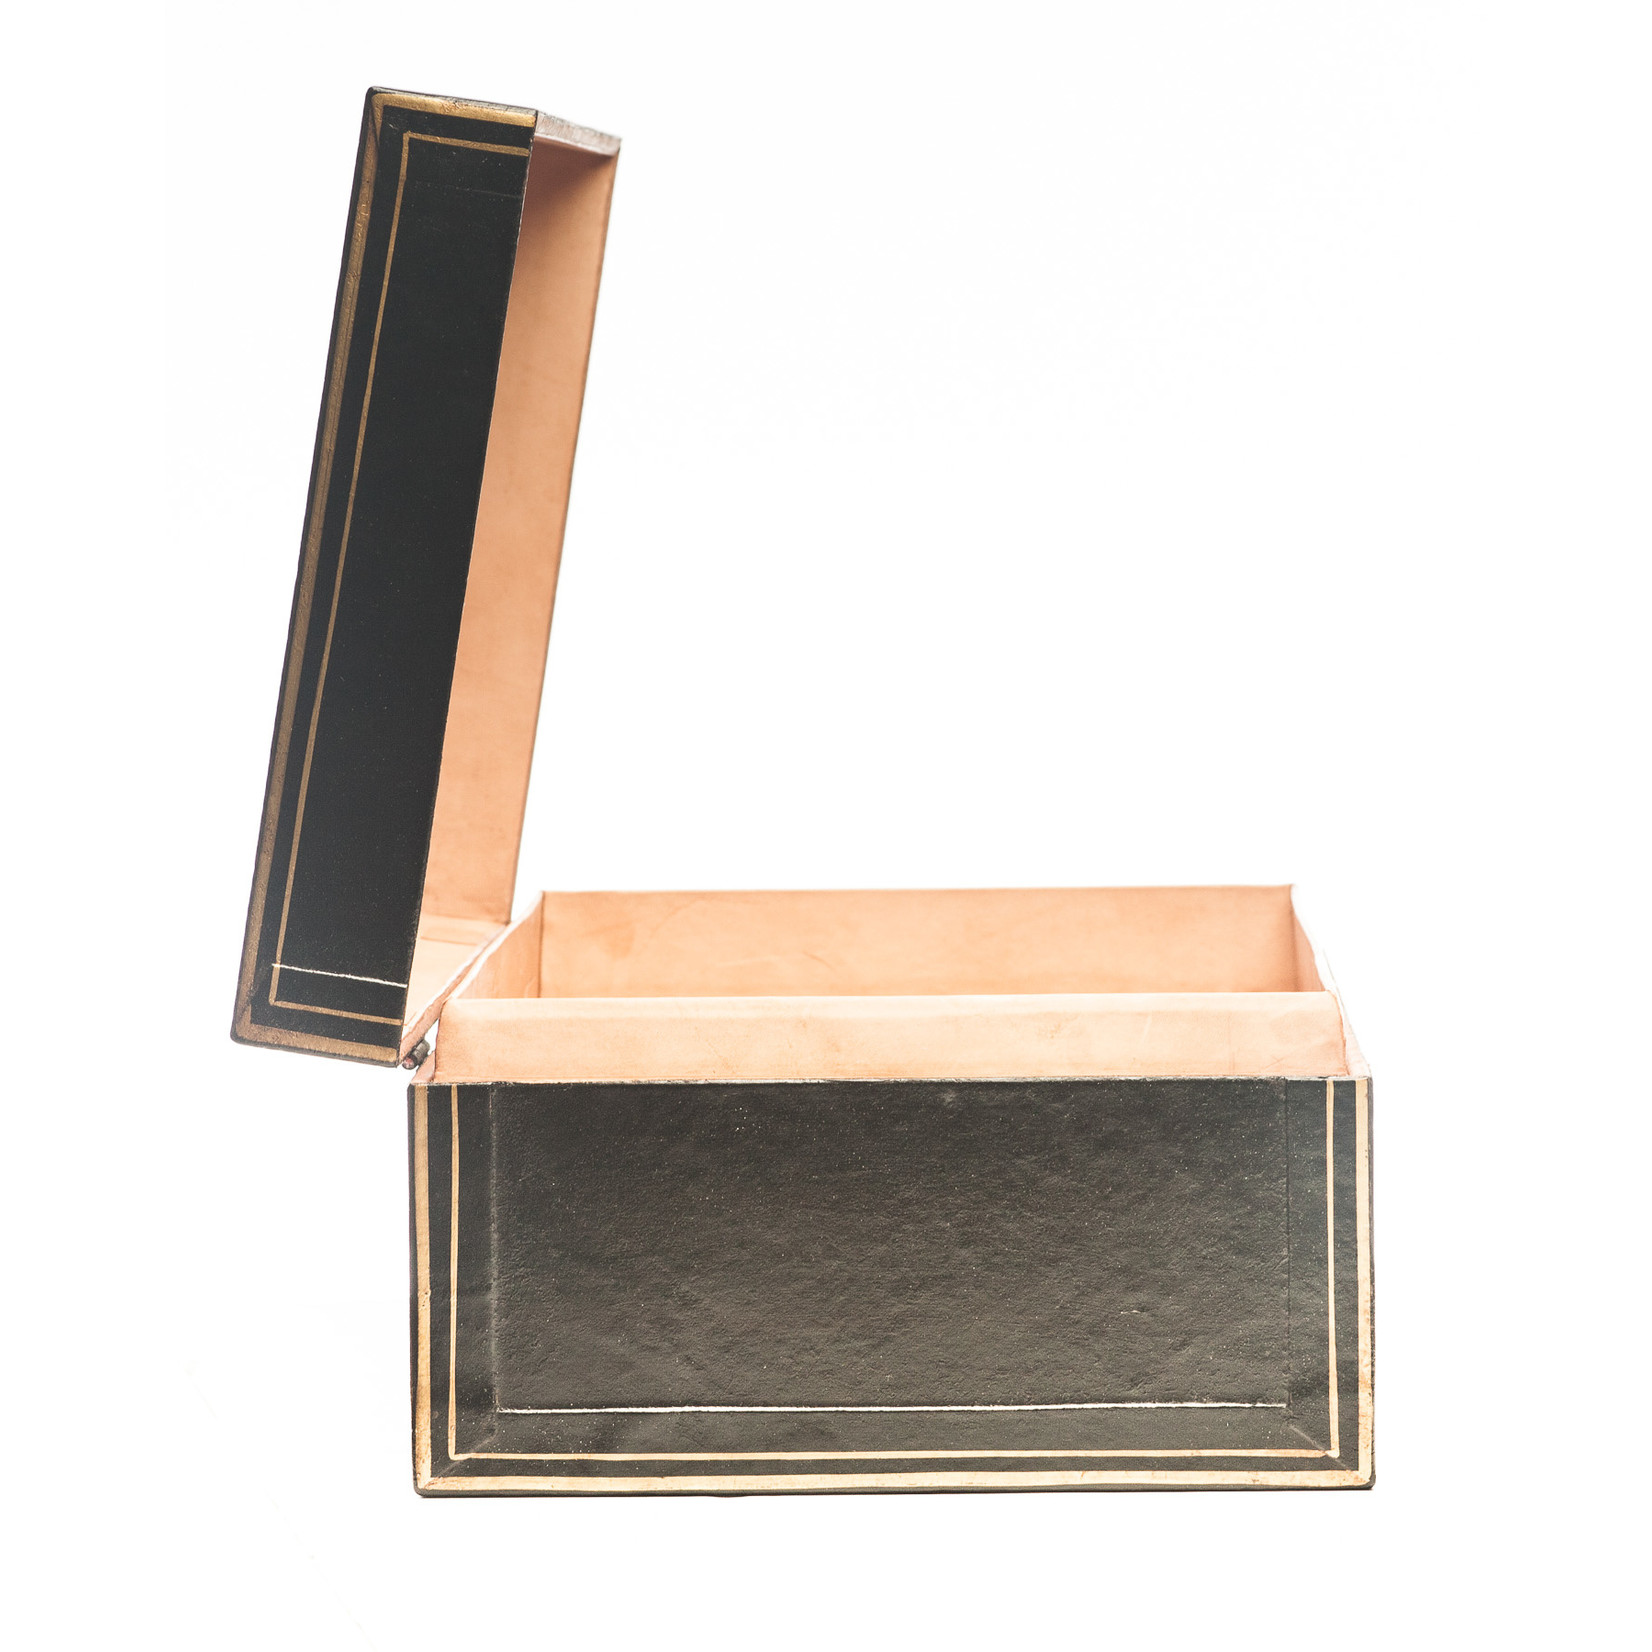 Lawrence & Scott Black Regalia Leather Box  (16.5") with hand-painted tuxedo gold trim